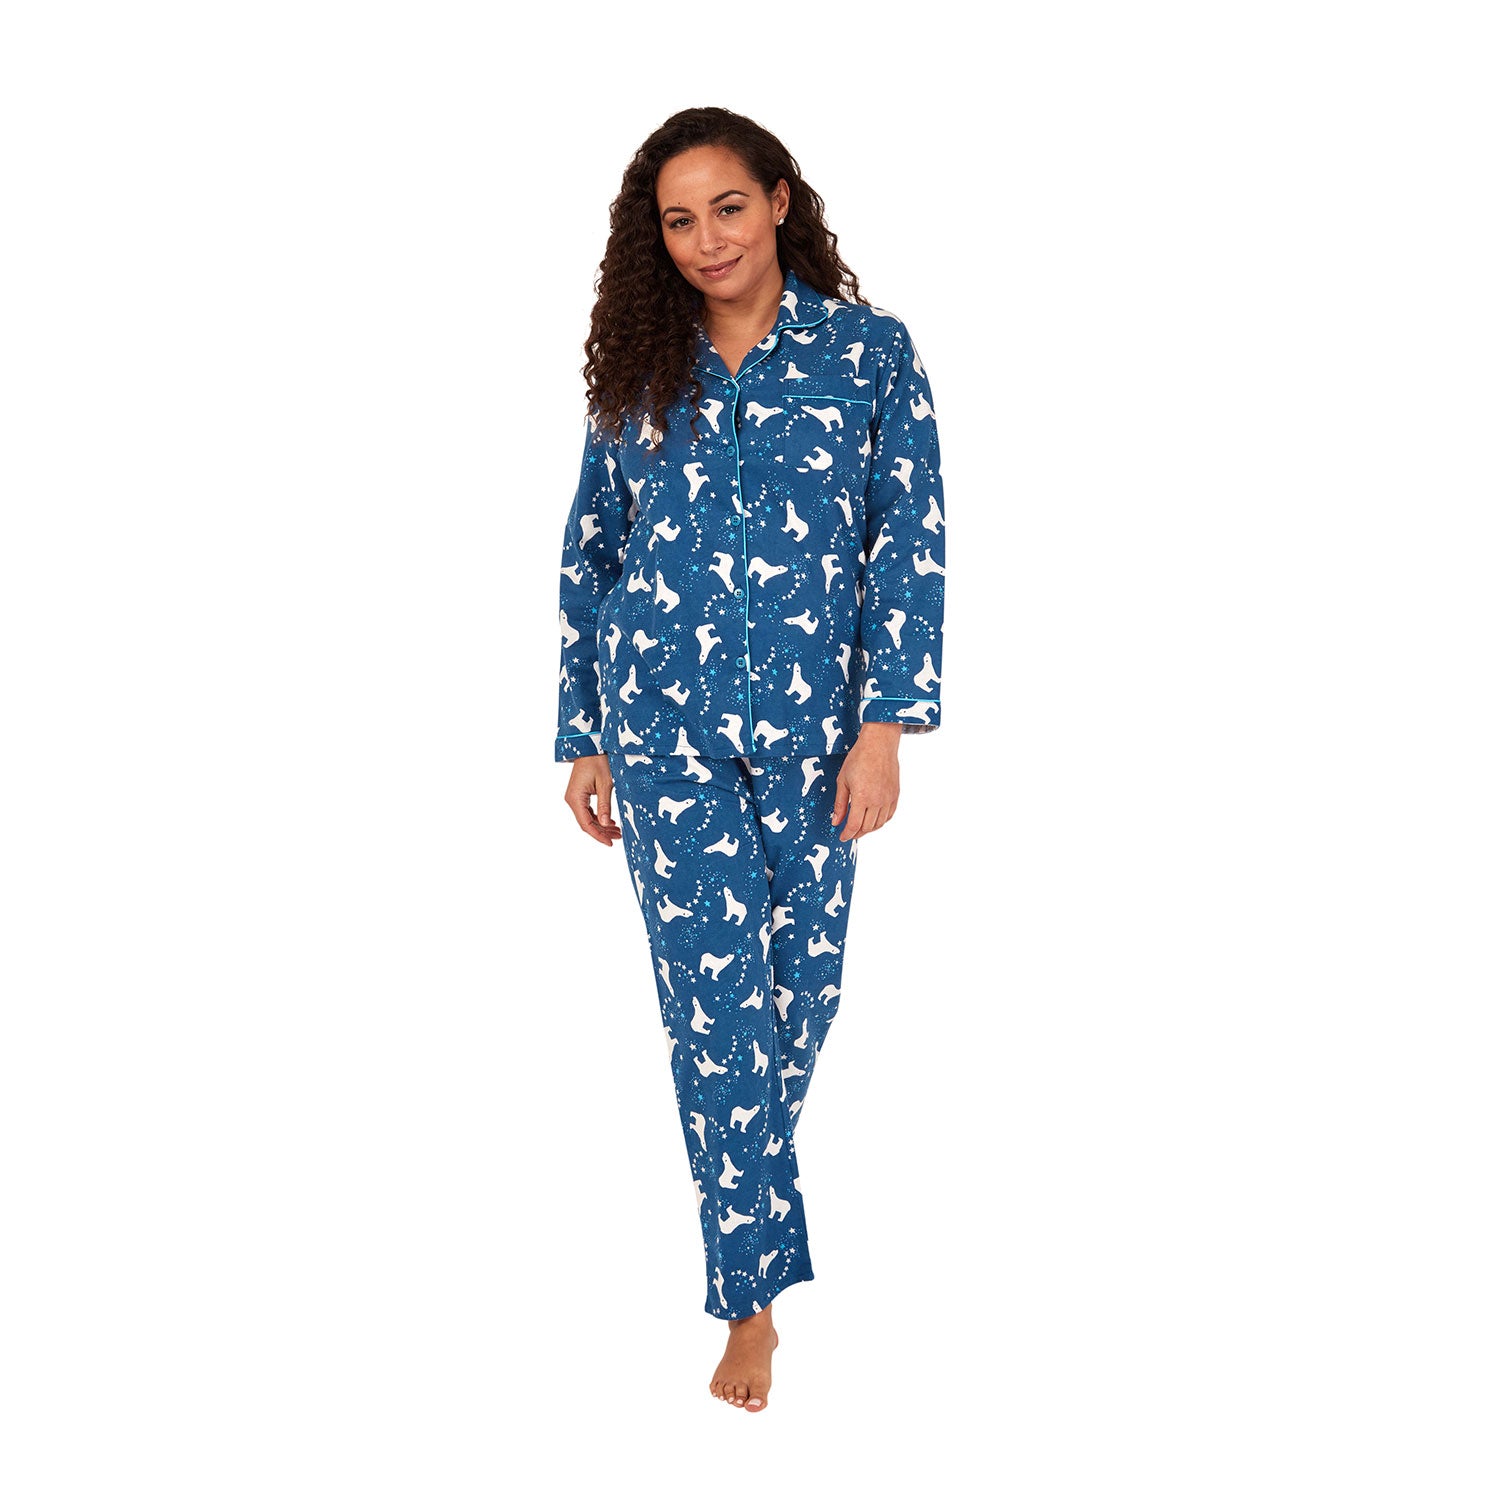 Indigo Sky Polar Bear Brushed Cotton Pyjamas - Ocean Blue 1 Shaws Department Stores